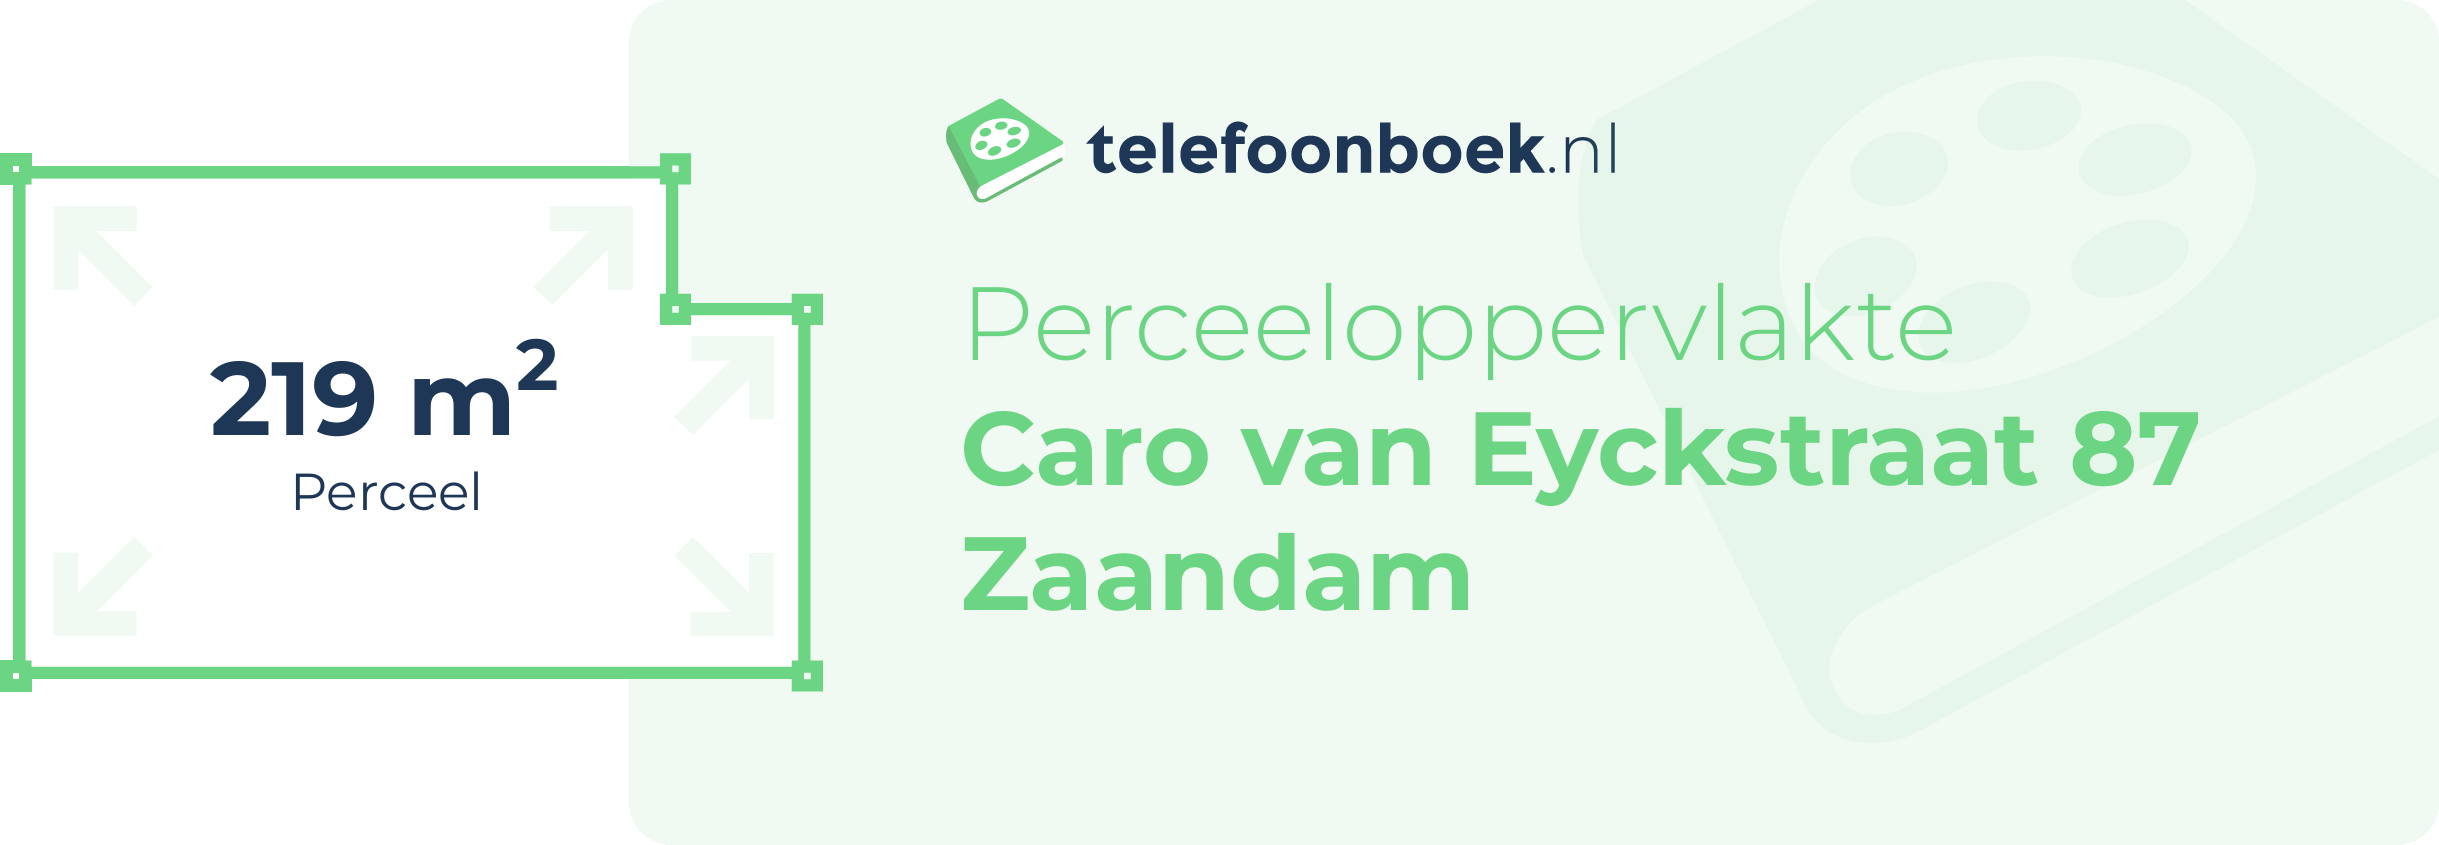 Perceeloppervlakte Caro Van Eyckstraat 87 Zaandam